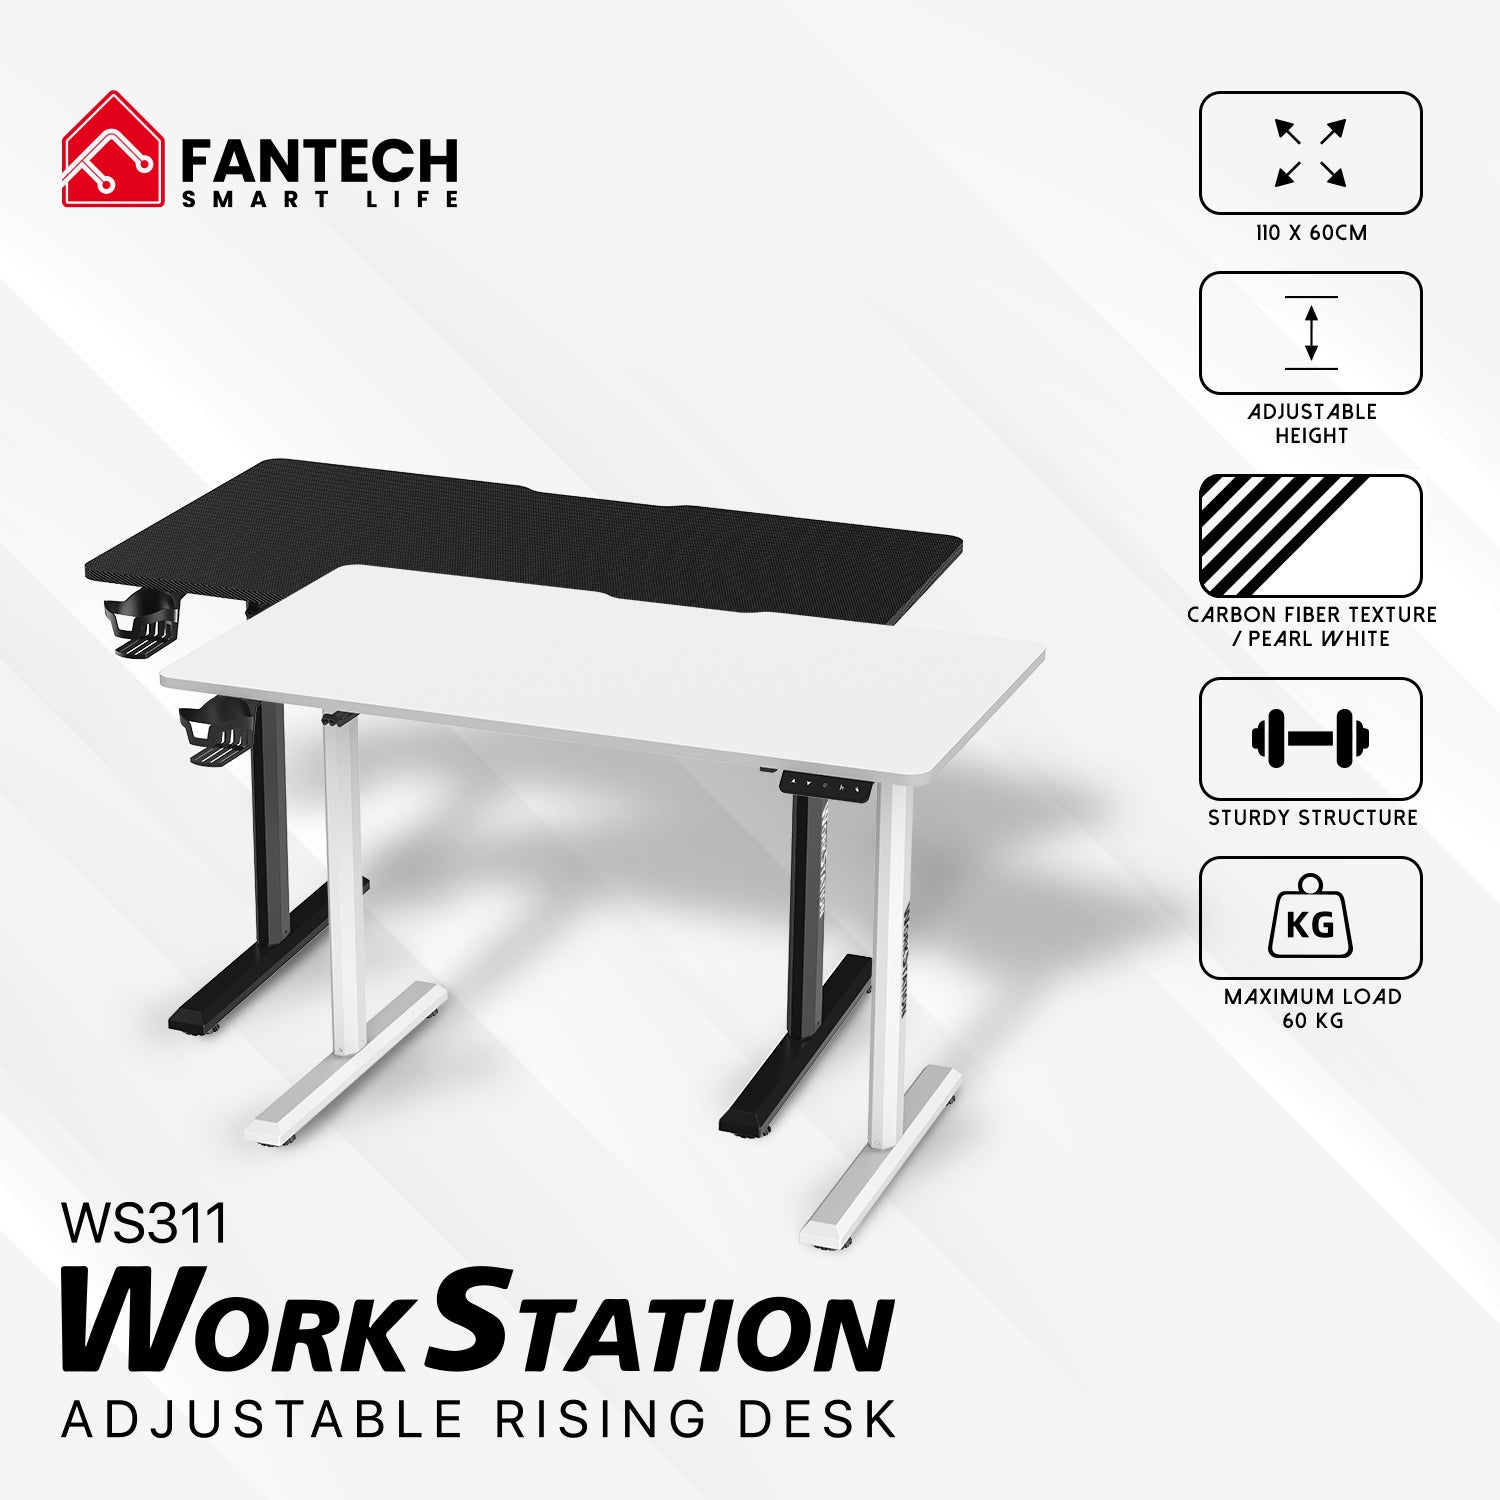 Fantech WS311 Work Station Adjustable Rising Desk Desk & Chair 130 JOD